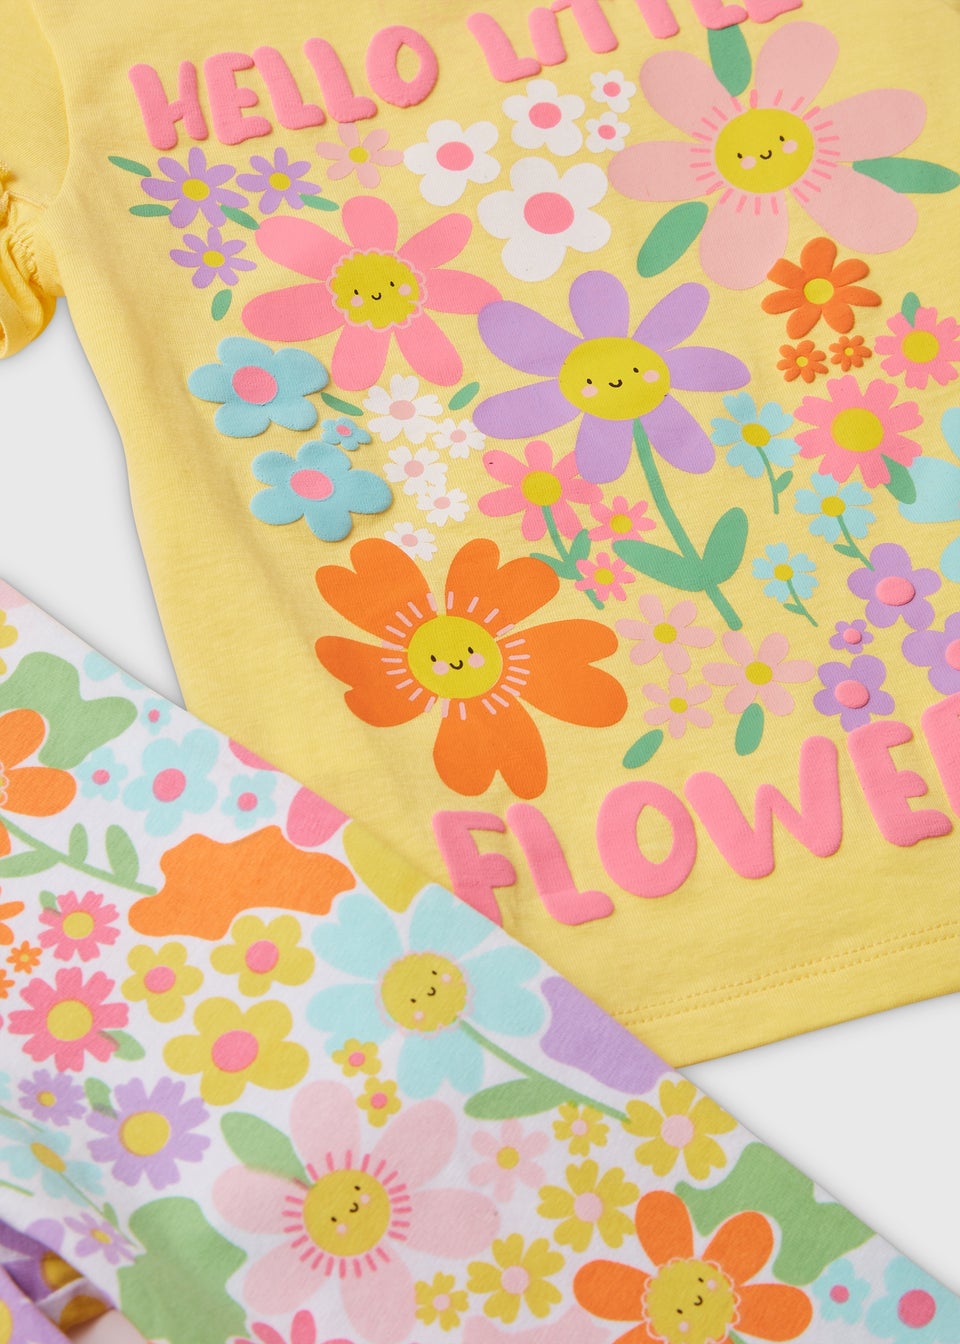 Girls Yellow Floral Print T-Shirt & Leggings Set (1-7yrs)